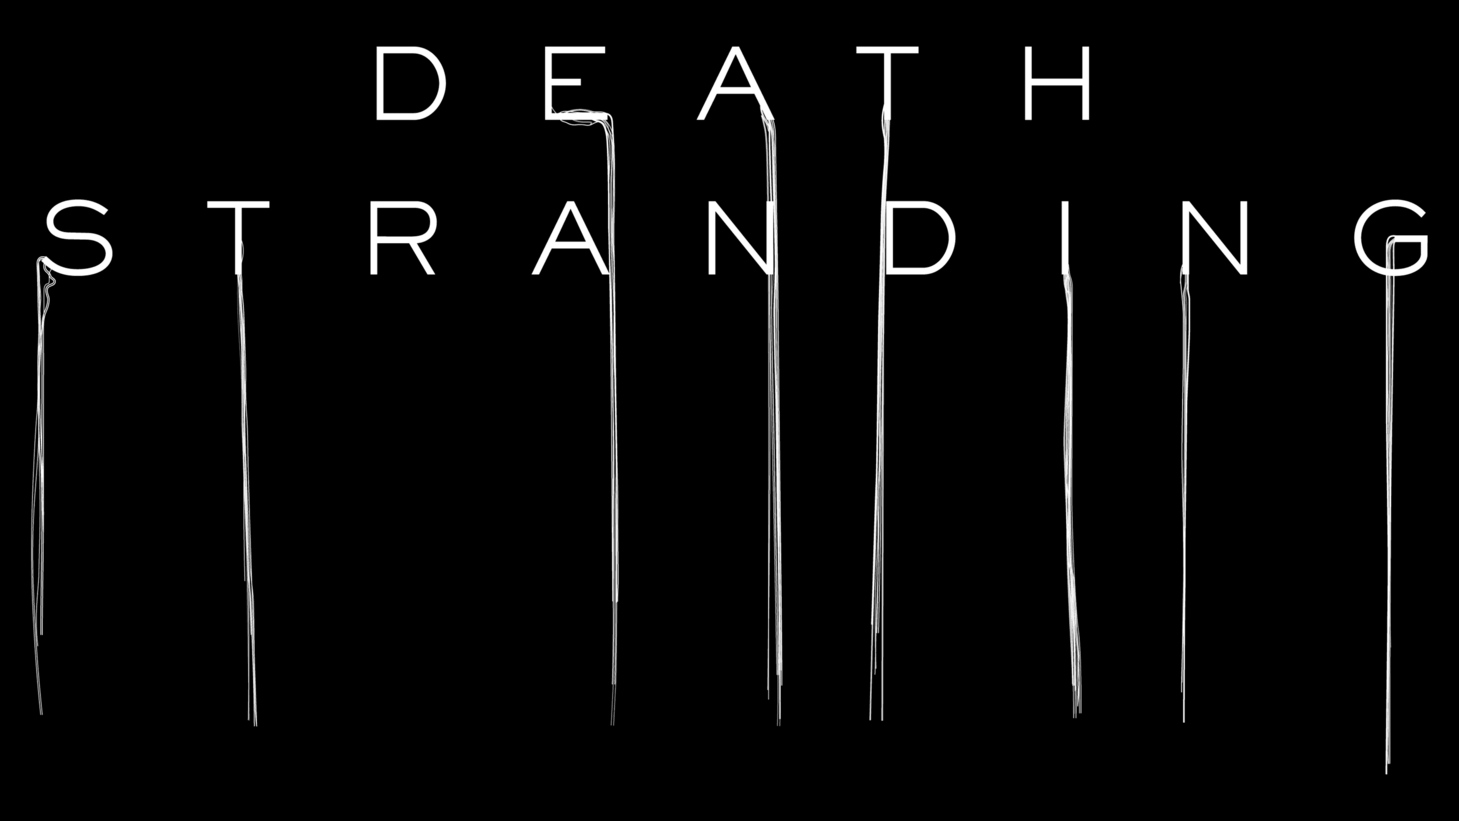 Death stranding logo